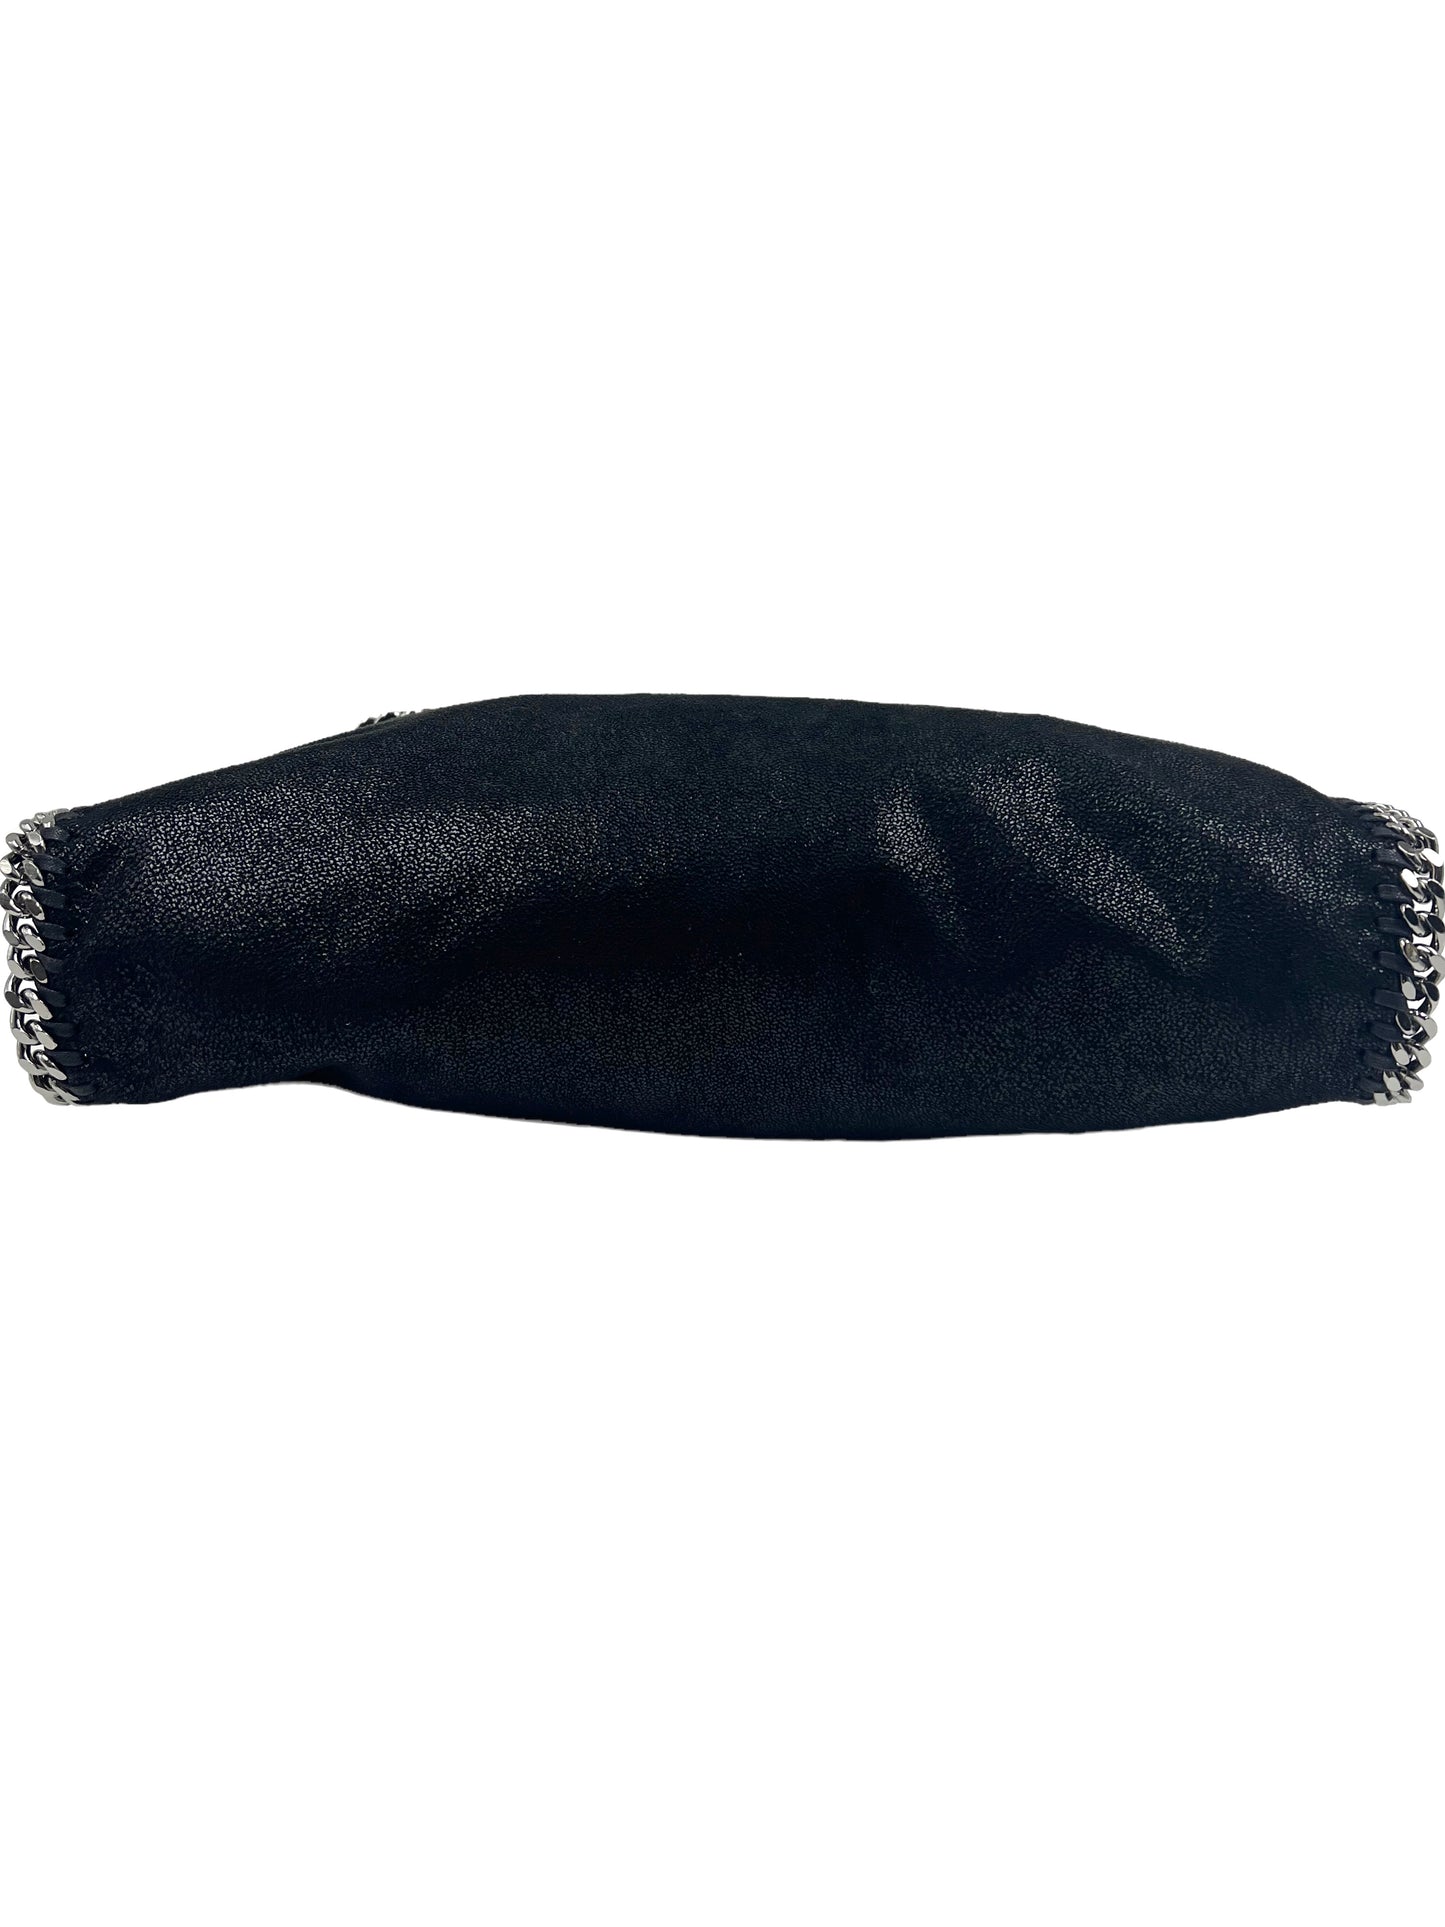 Stella McCartney Black Vegan Leather Three Chain Falabella Bag